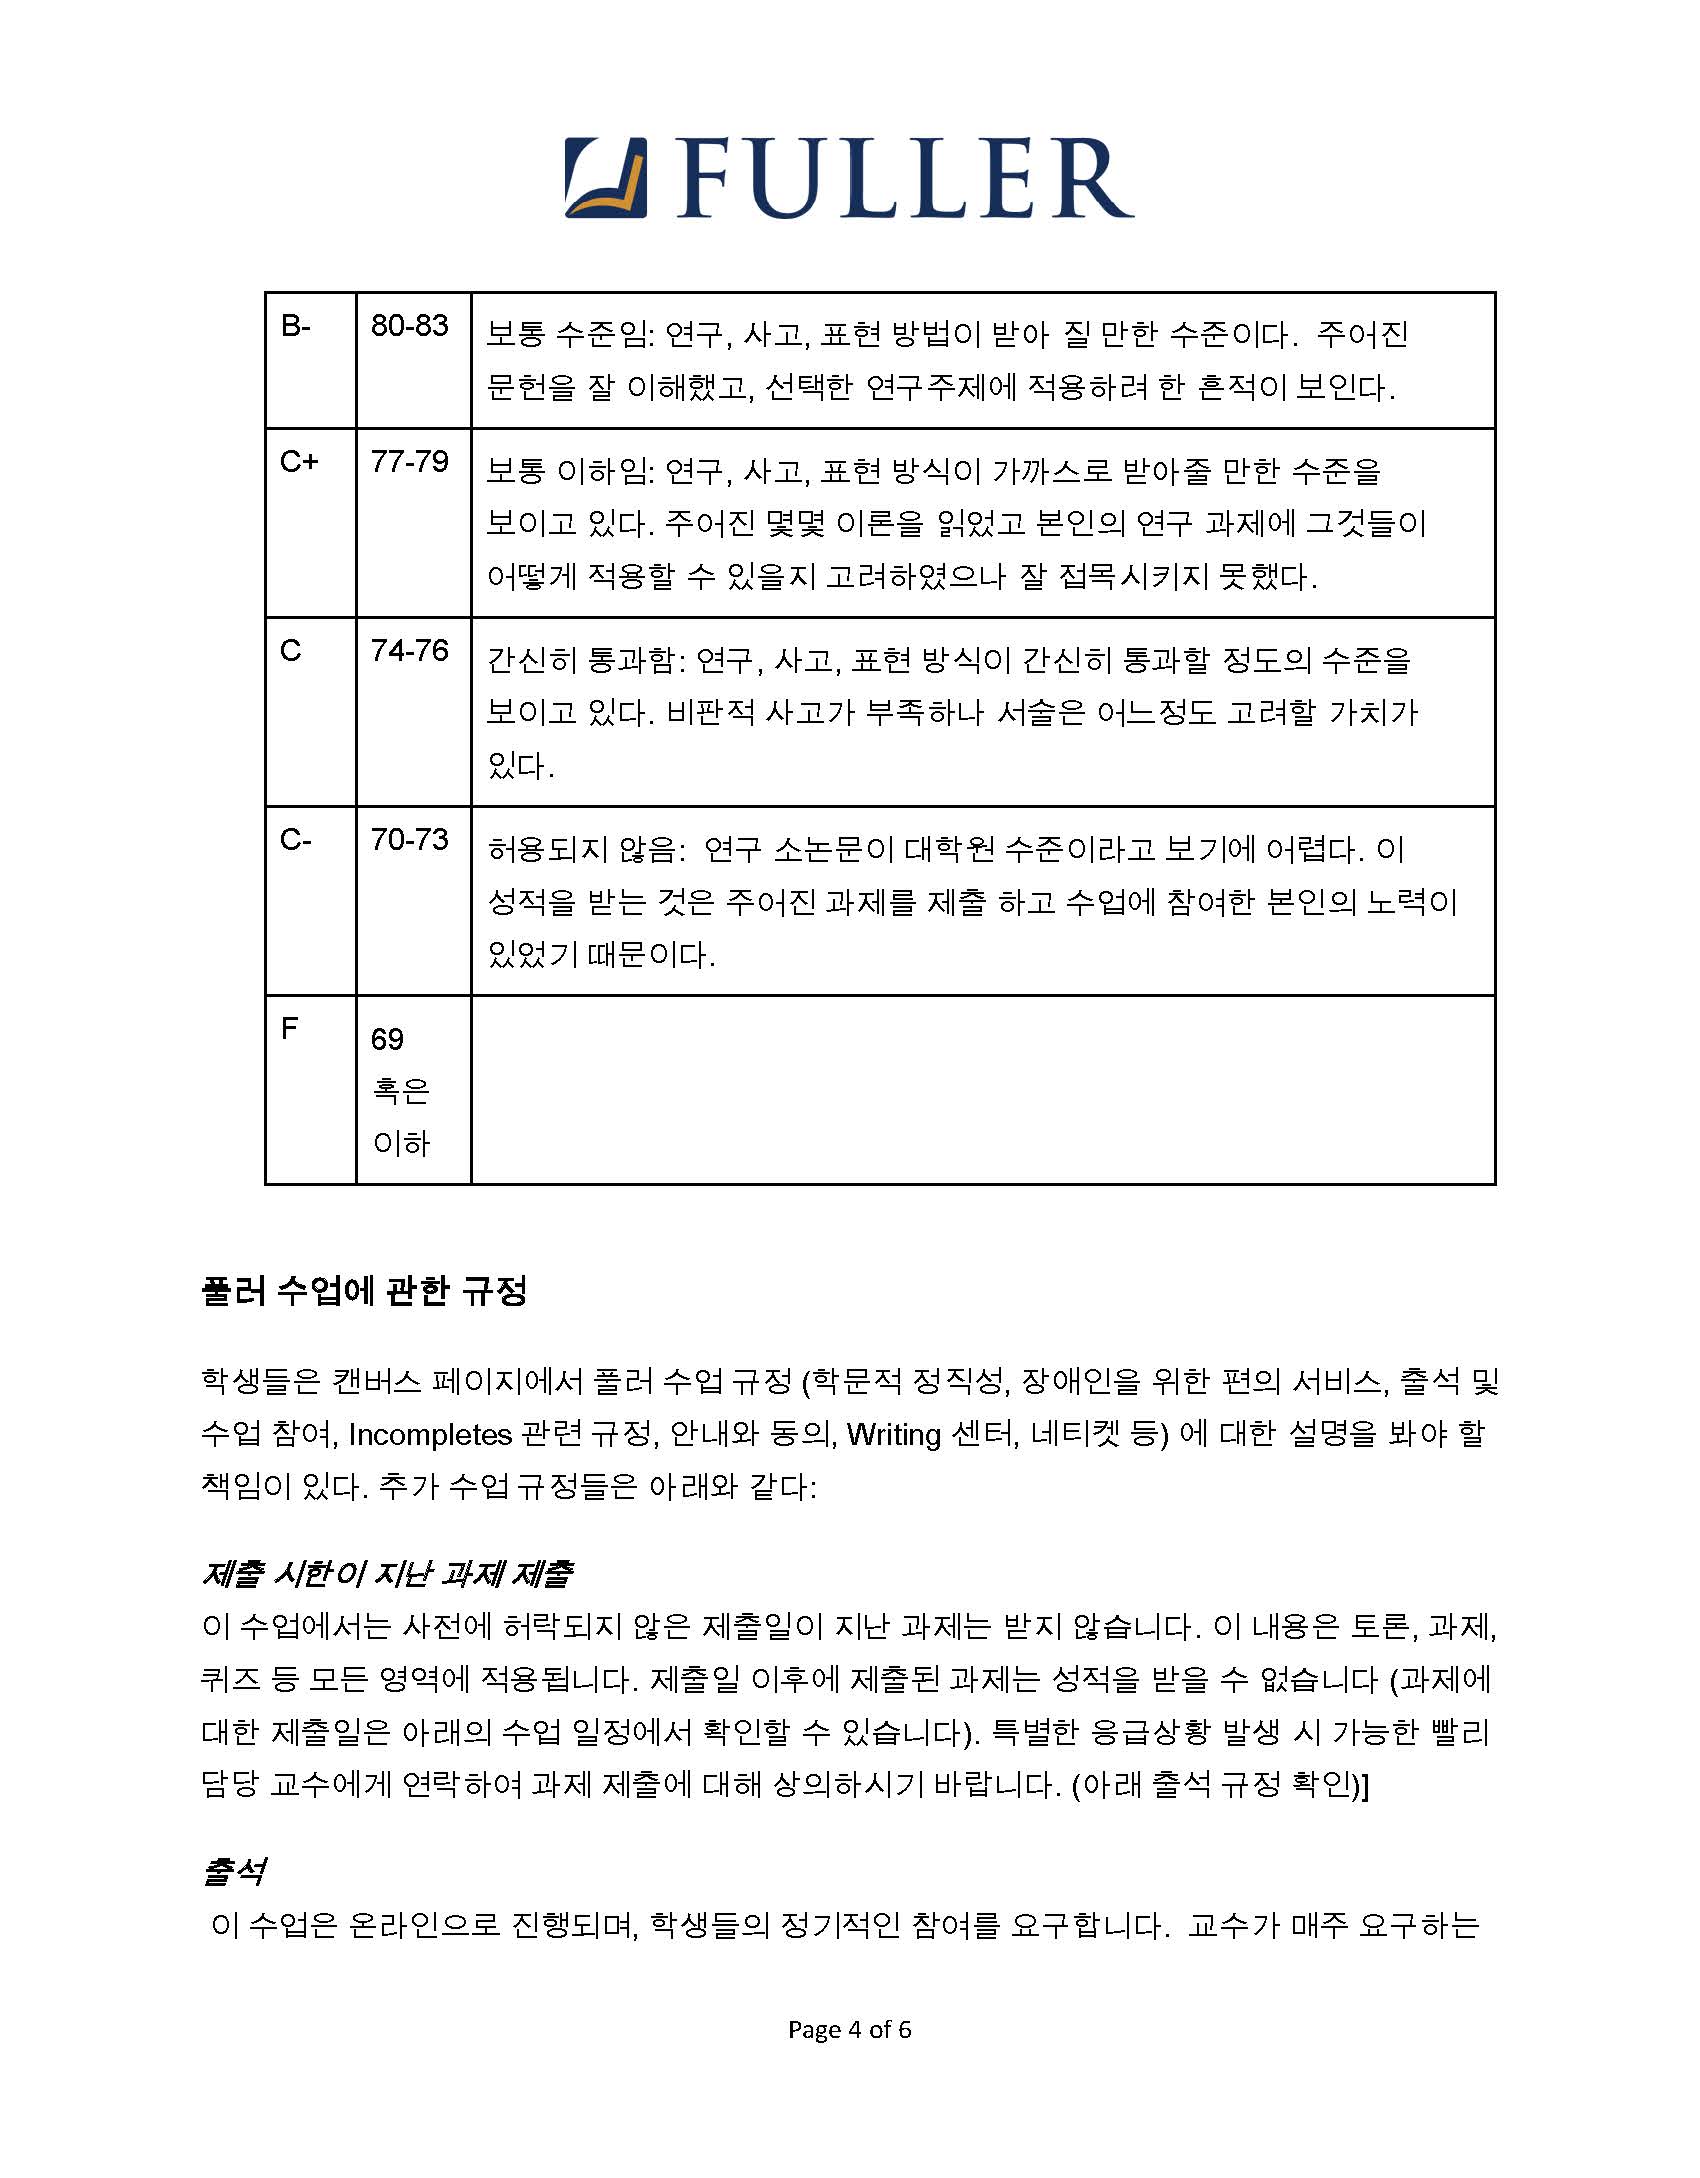 MC527_MK755 Syllabus (Korean)_Page_4.jpg